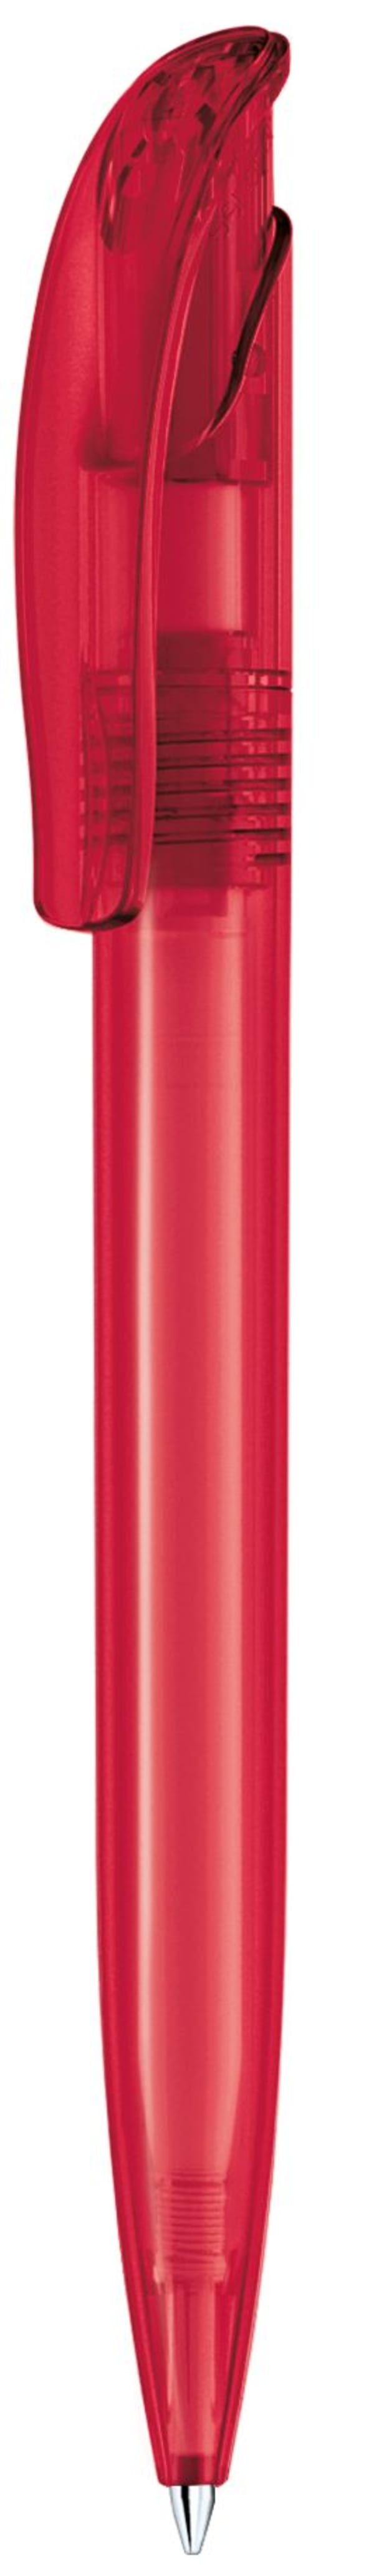 Kugelschreiber-Challenger-Frosted-blau-dokumentenecht-Rot-Kunststoff-Frontansicht-1